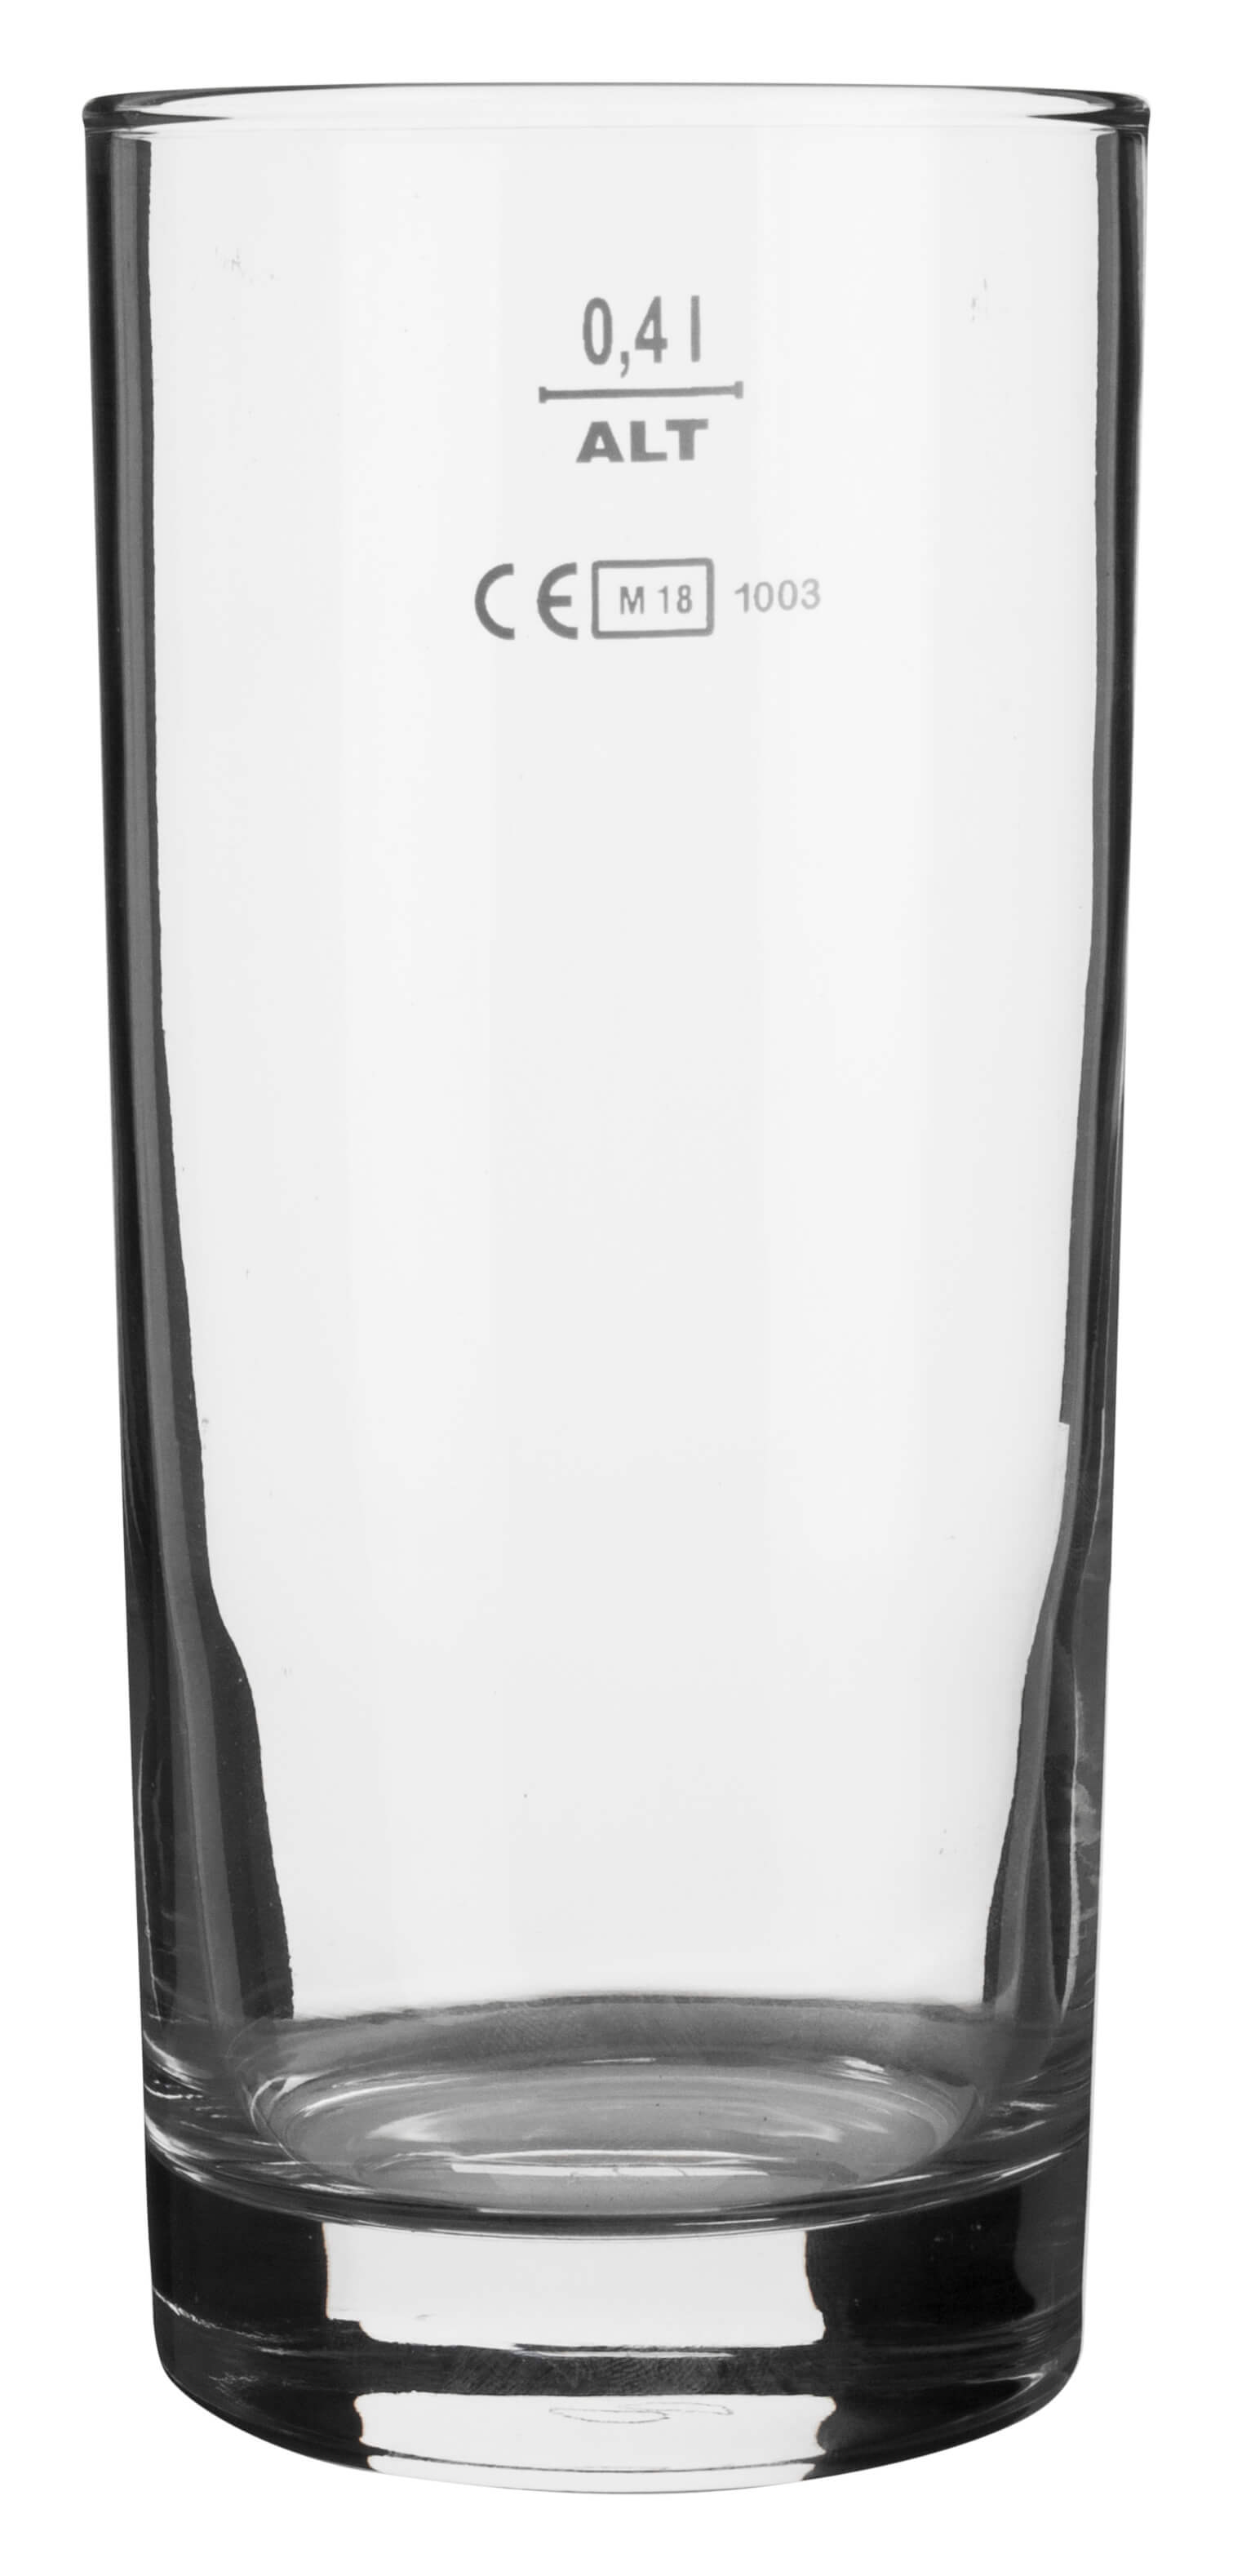 Longdrink glass Istanbul, Pasabahce - 485ml, 0,4l CM (1 pc.)